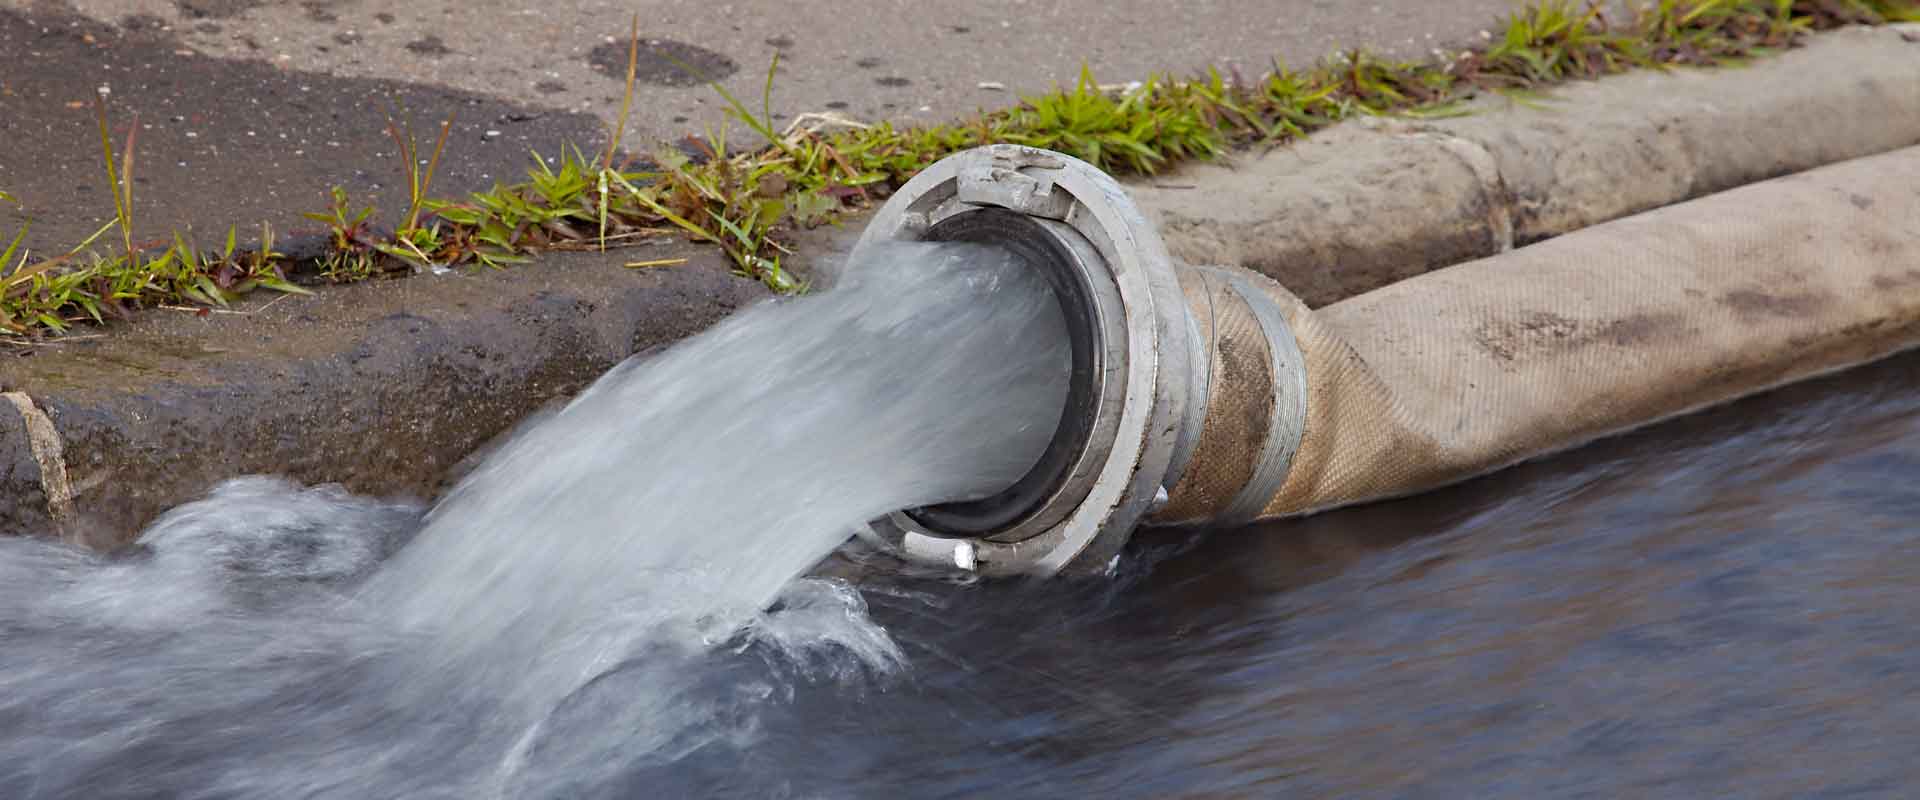 Sewage Water Cleanup: BusinessHAB.com